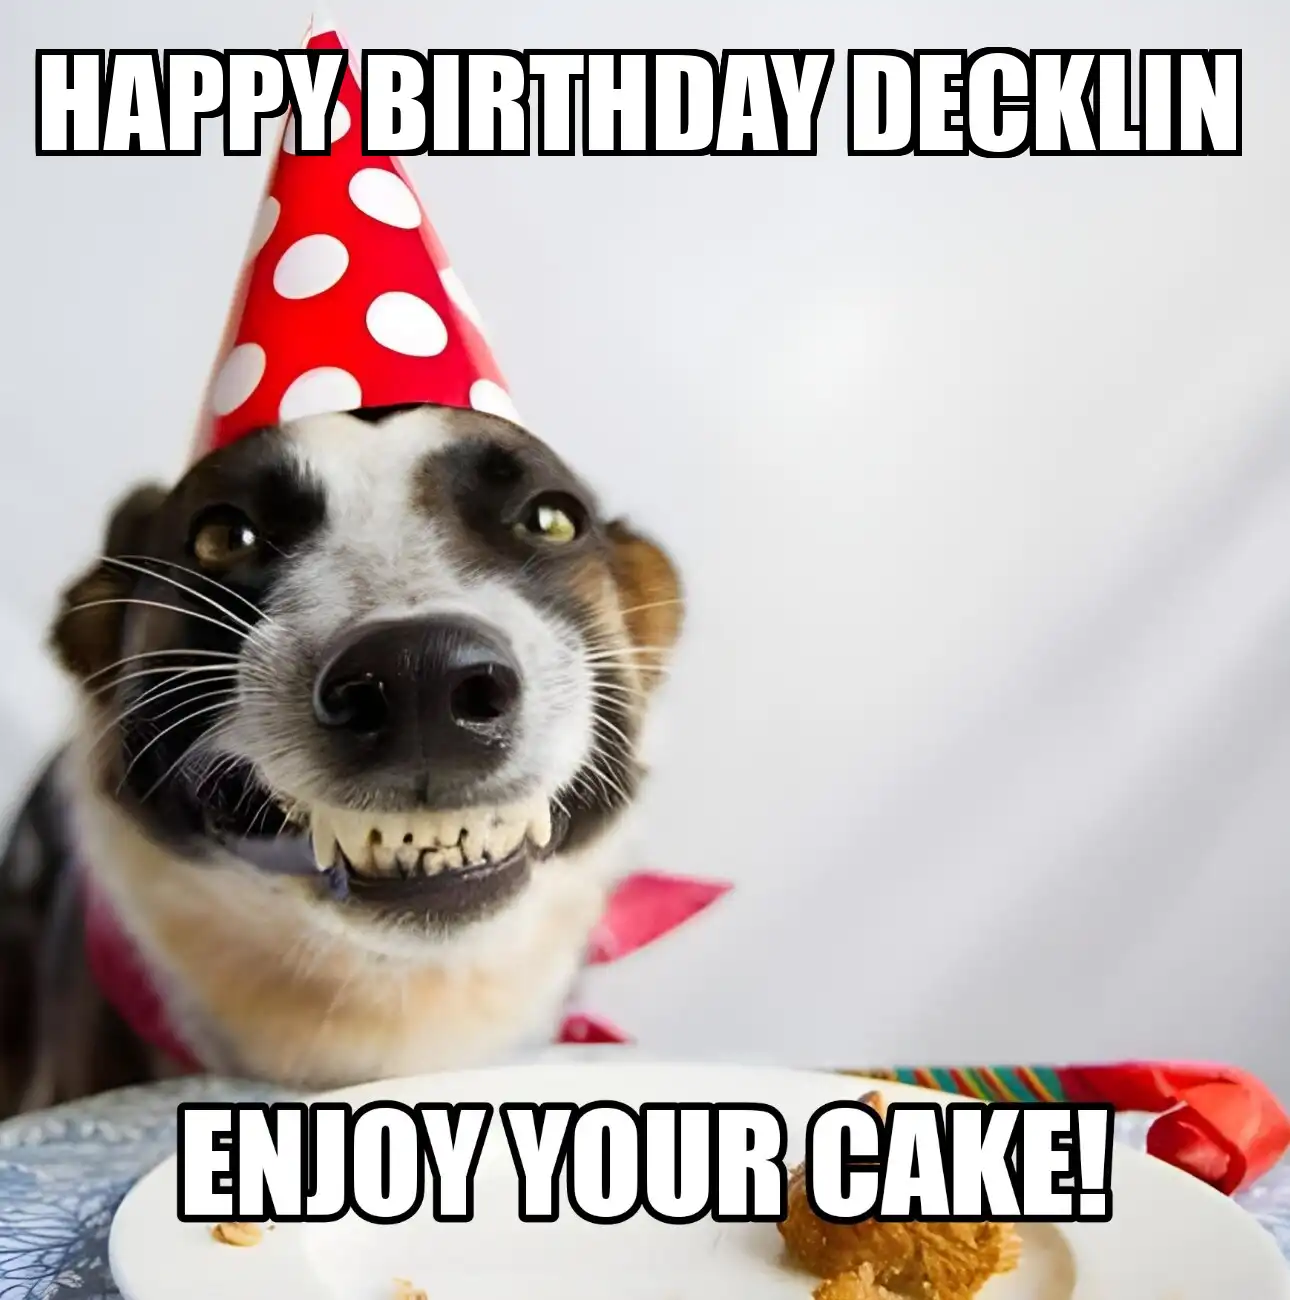 Happy Birthday Decklin Enjoy Your Cake Dog Meme